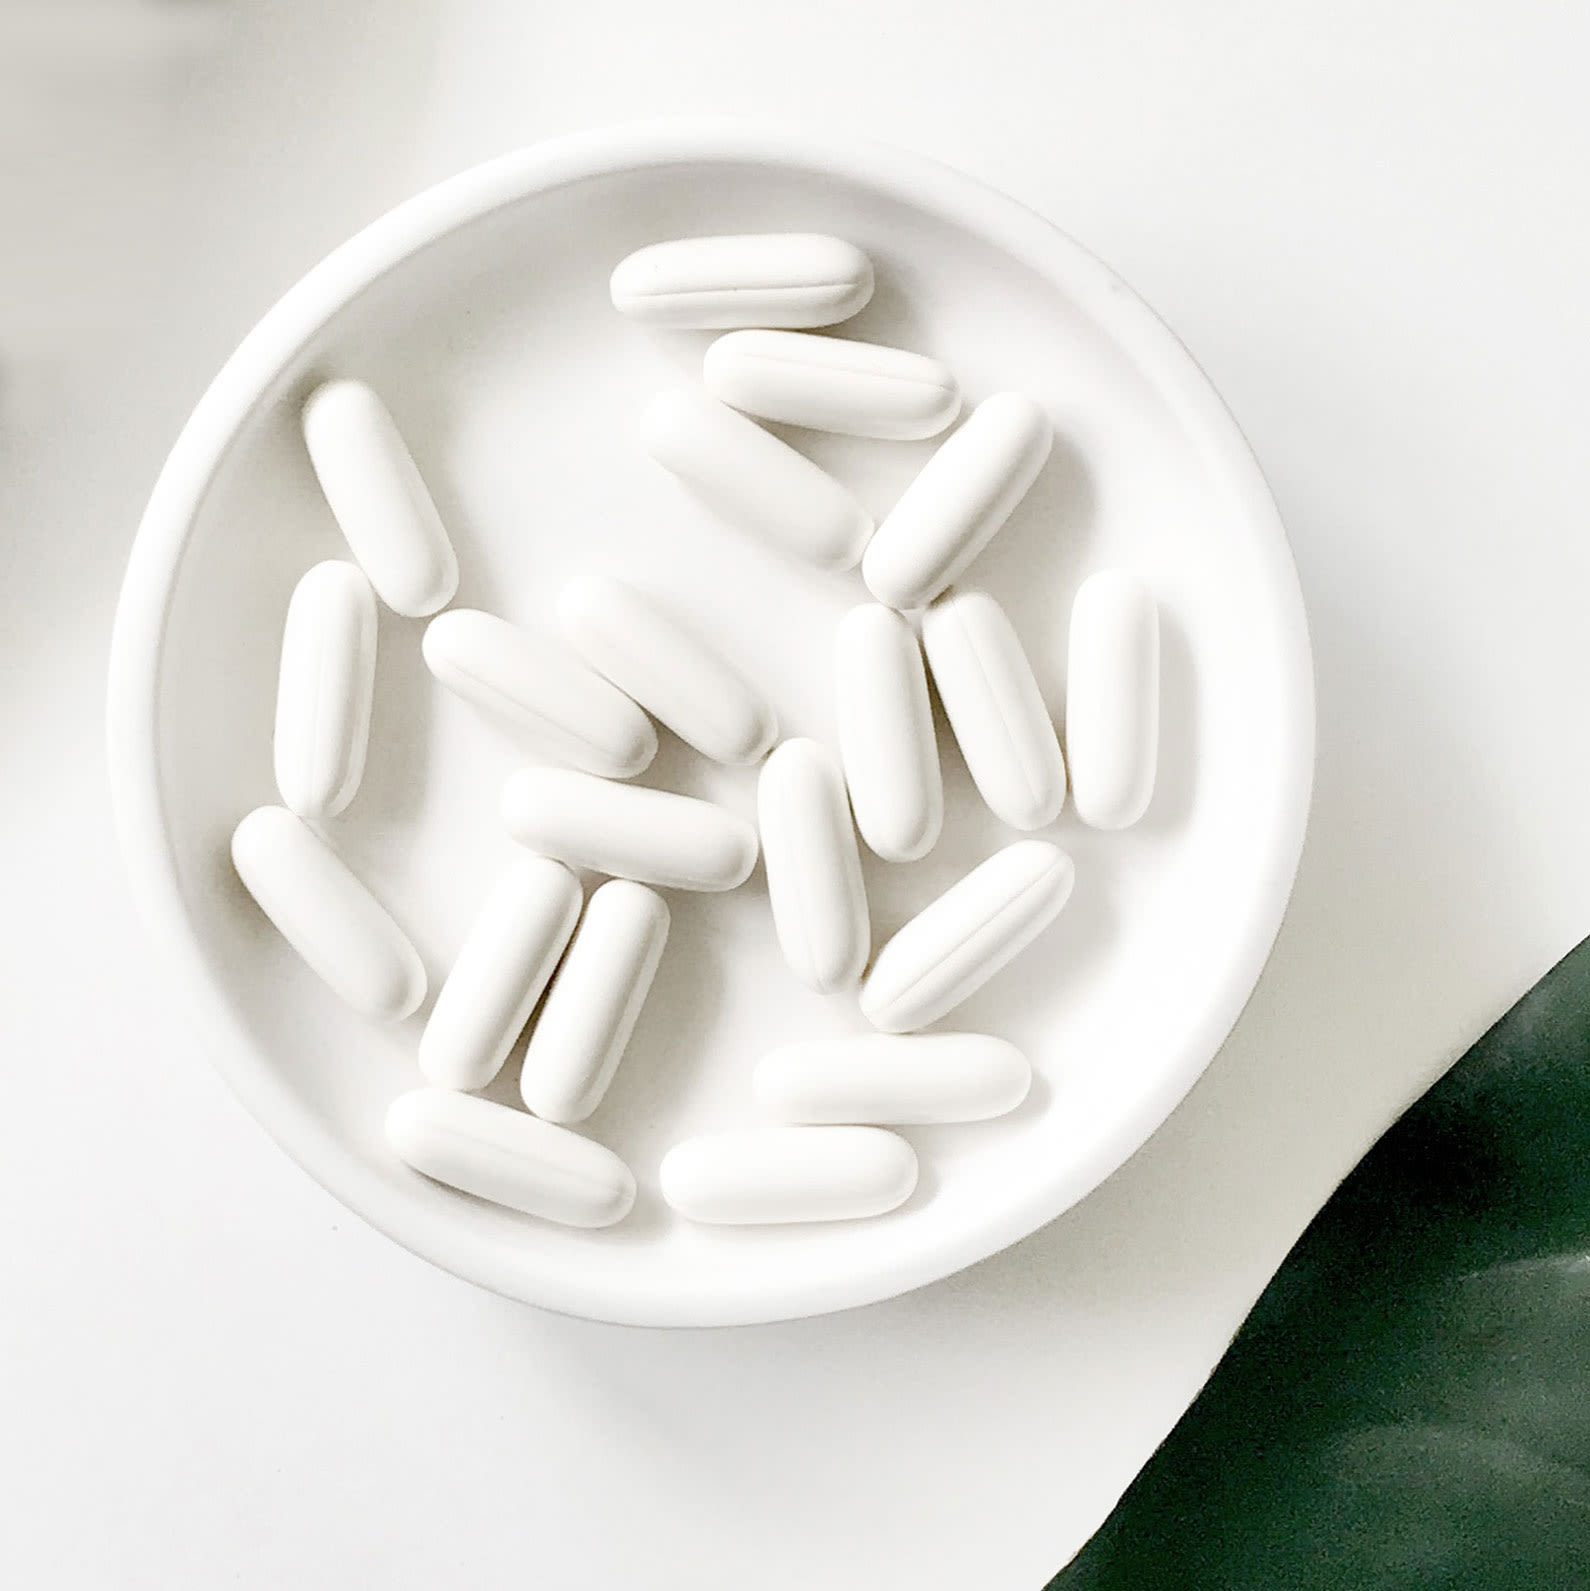 White pills in a white dish